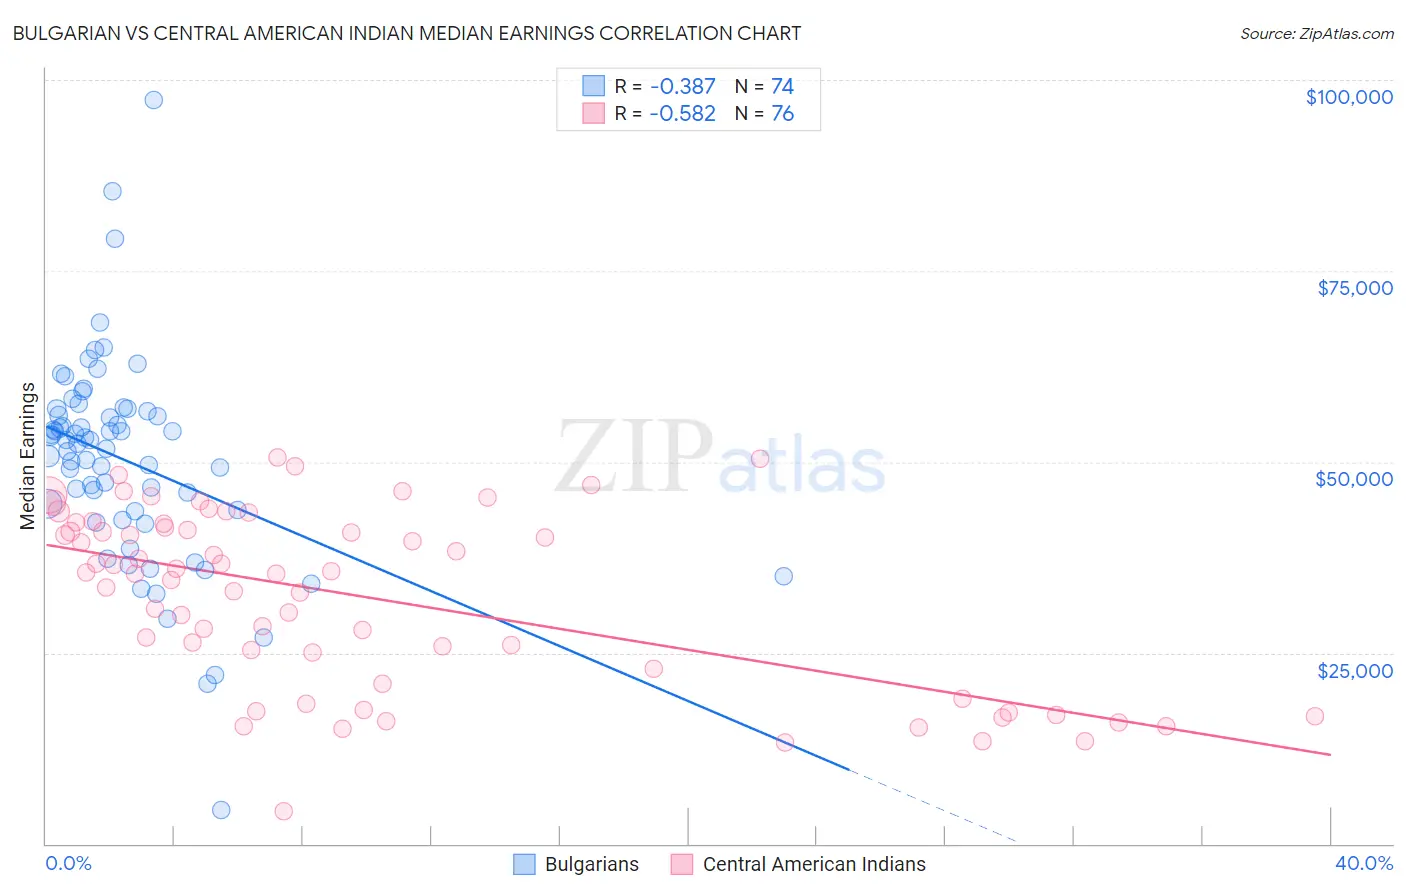 Bulgarian vs Central American Indian Median Earnings